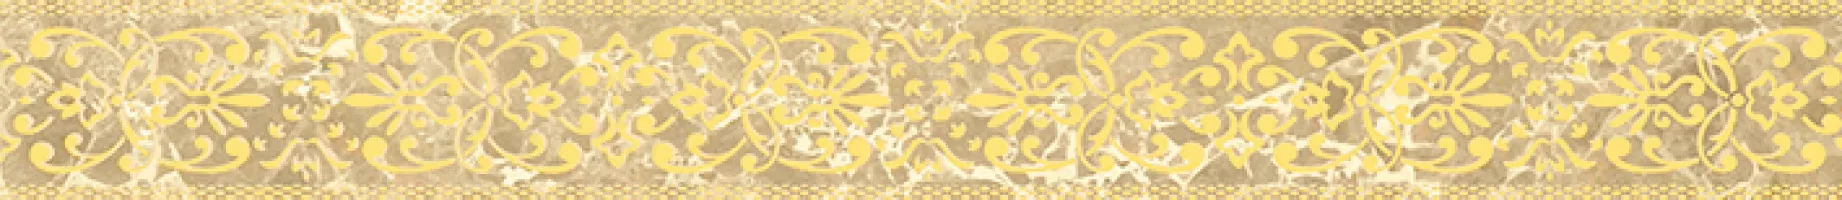 Плитка Gracia Ceramica 60x7 Bohemia бордюр beige бежевый 01 глянцевая